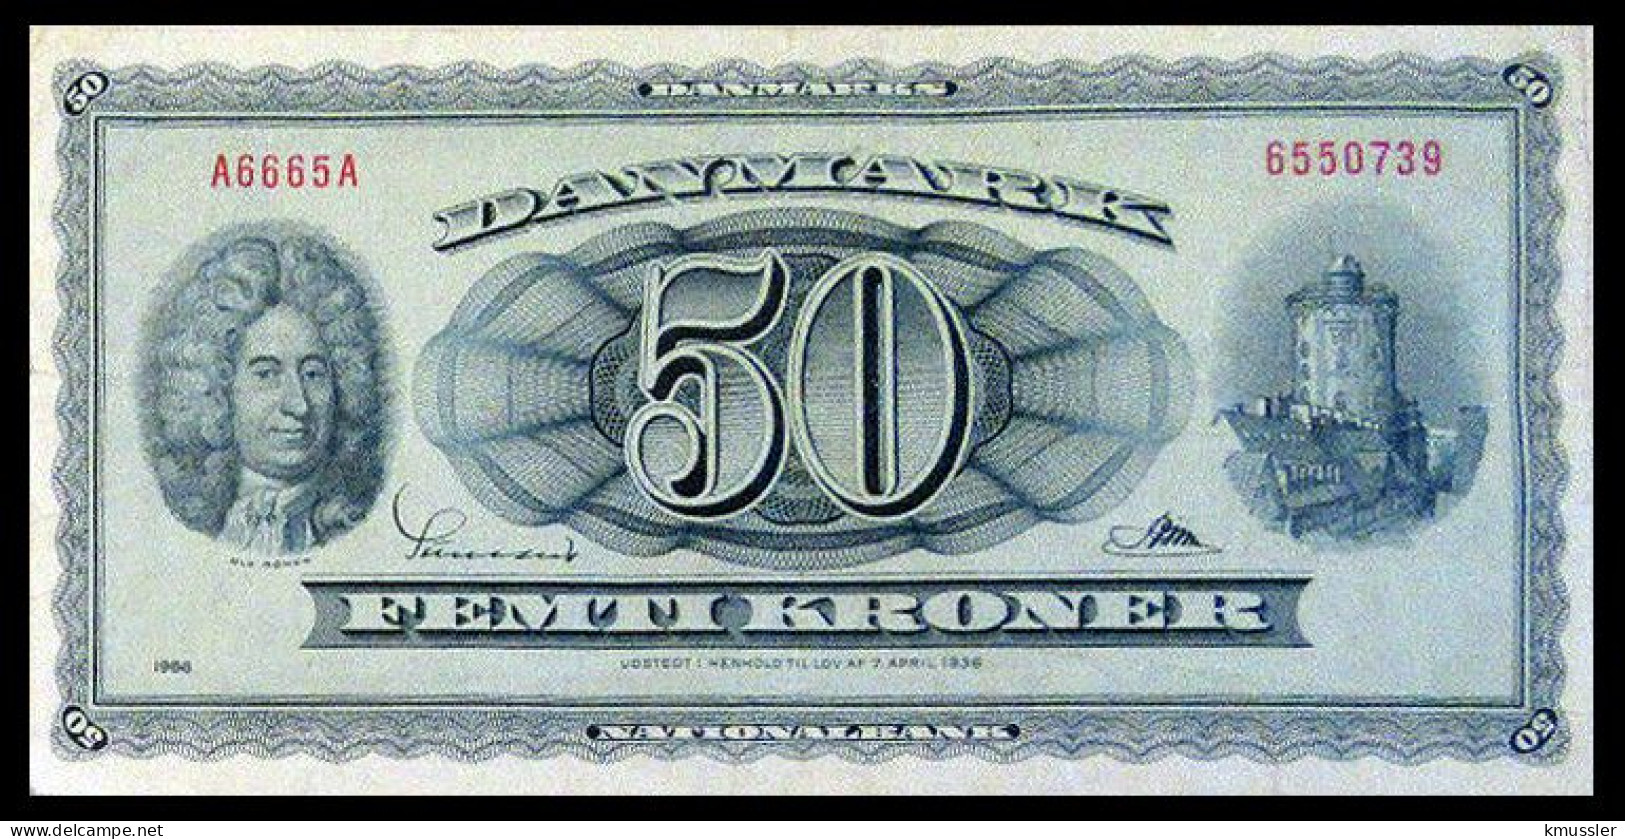 # # # Banknote Dänemark (Denmark) 50 Kroner 1936 # # # - Denmark